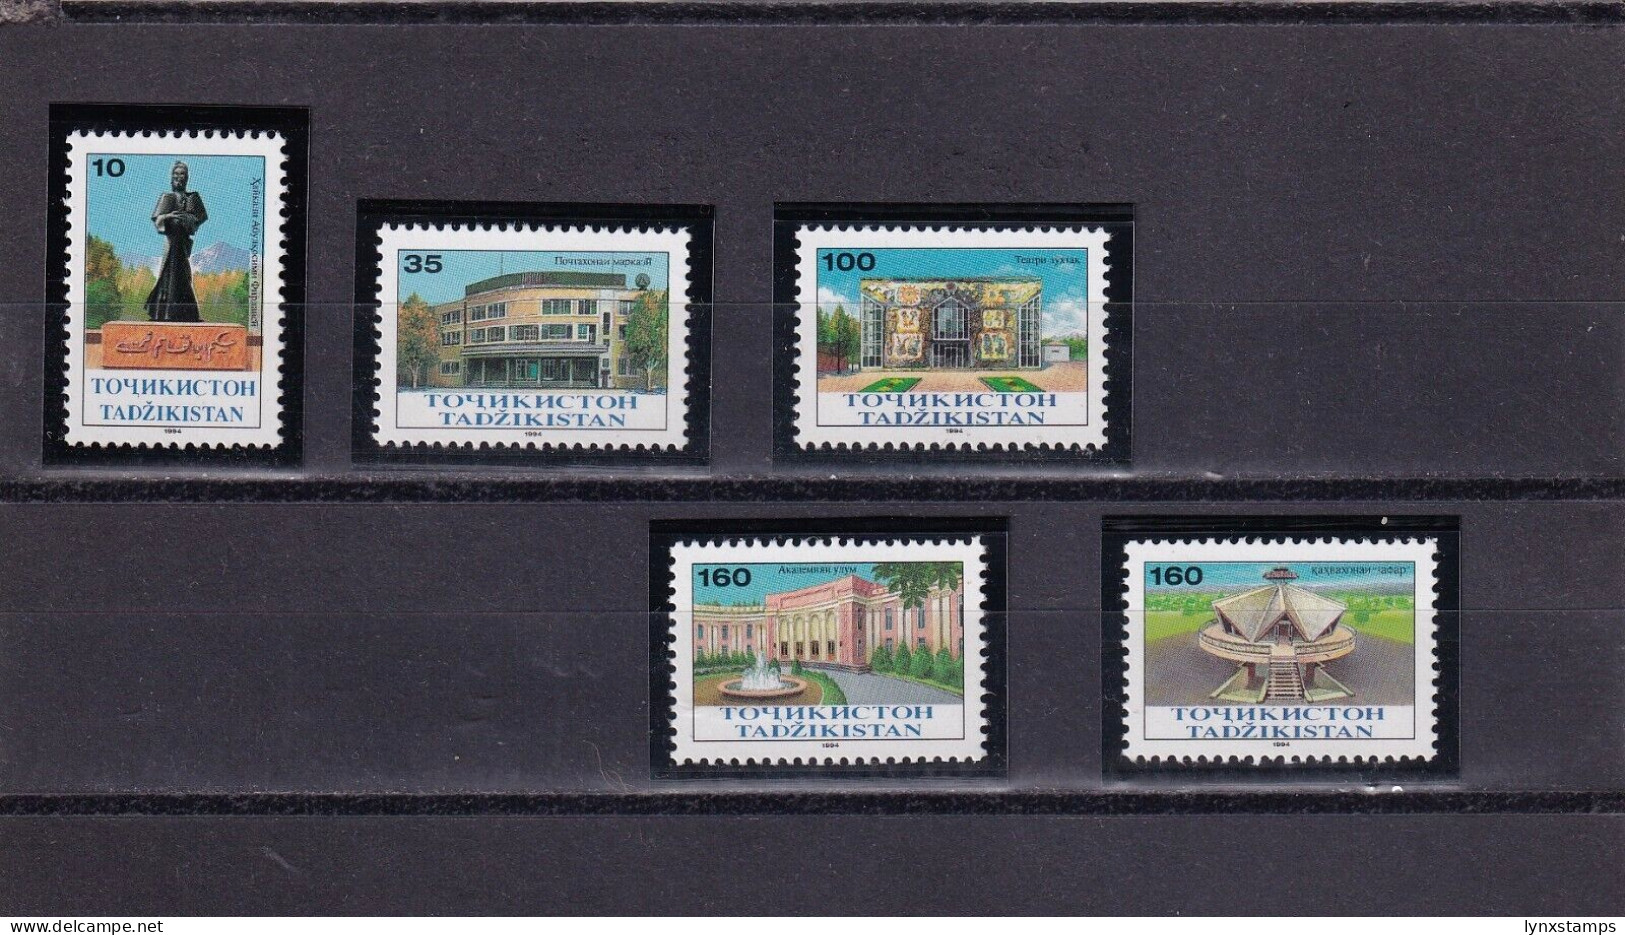 SA01 Tajikistan 1994 The 70th Anniversary Of The Capital Dushanbe Mint Stamps - Tajikistan